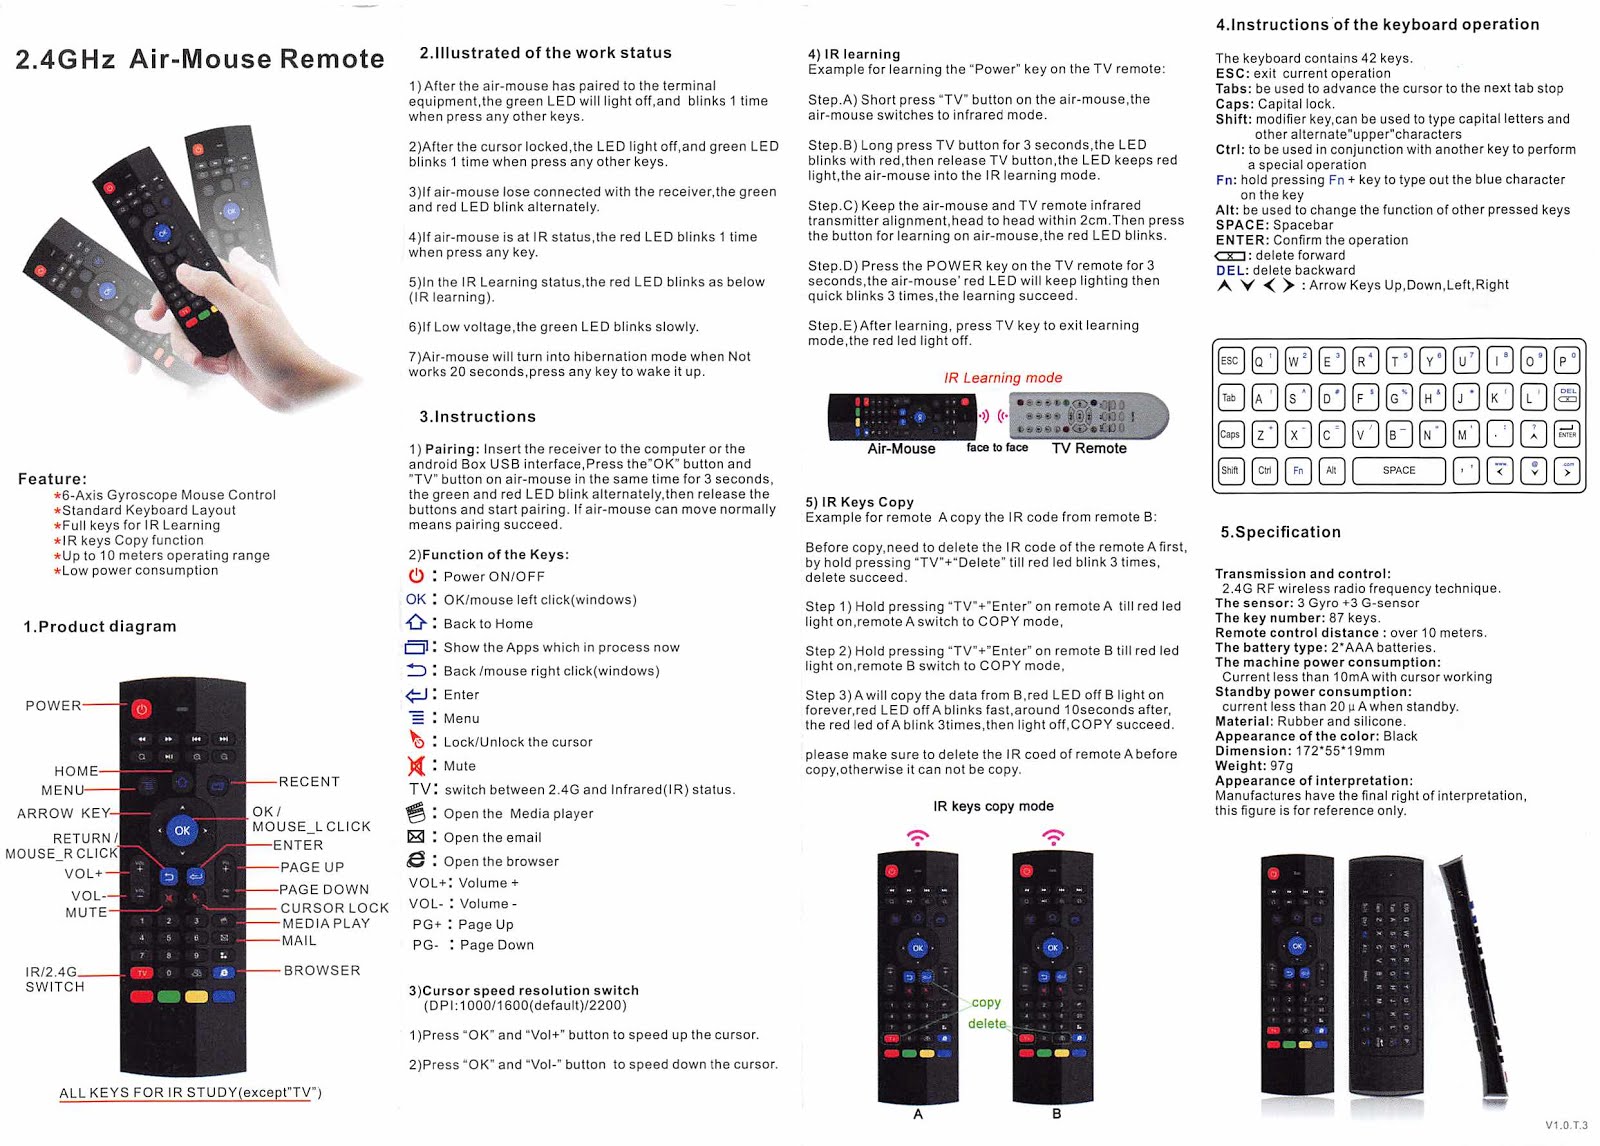 ps4 media remote manual pdf